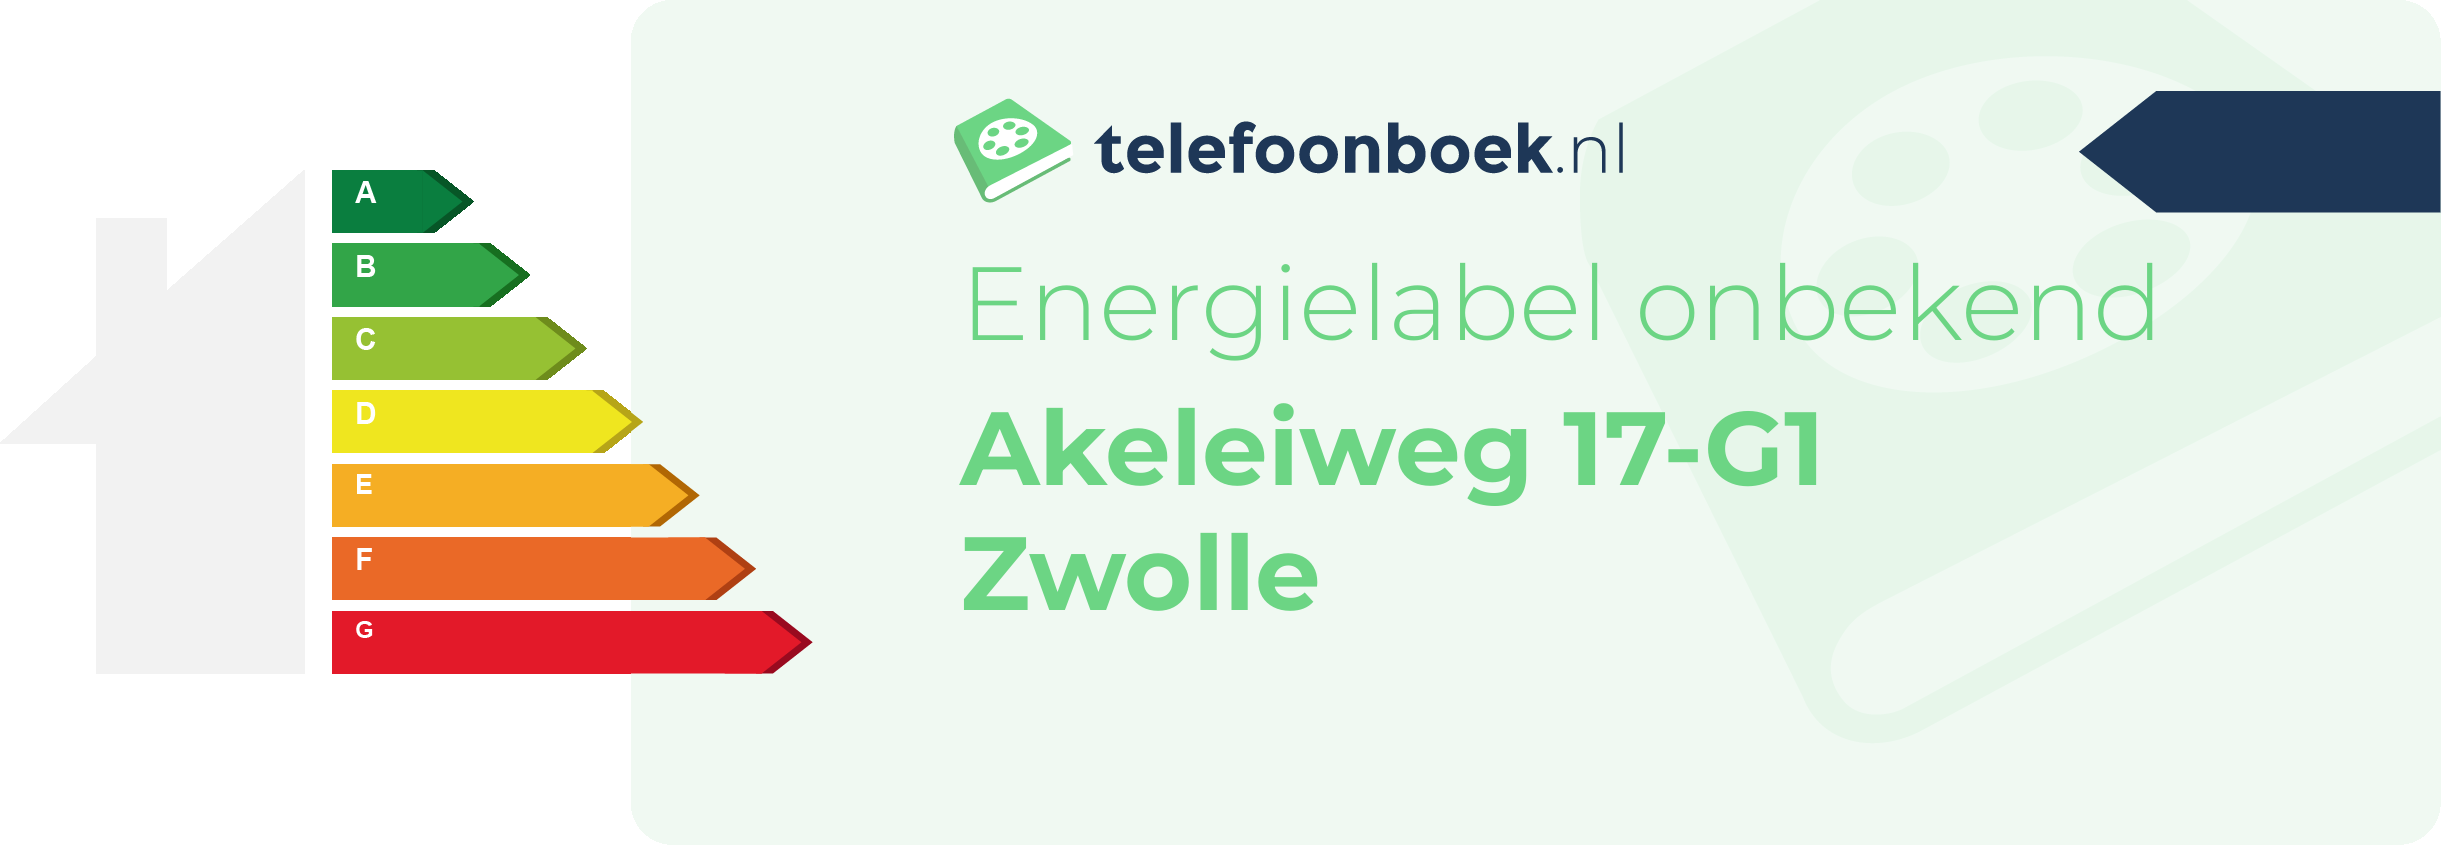 Energielabel Akeleiweg 17-G1 Zwolle